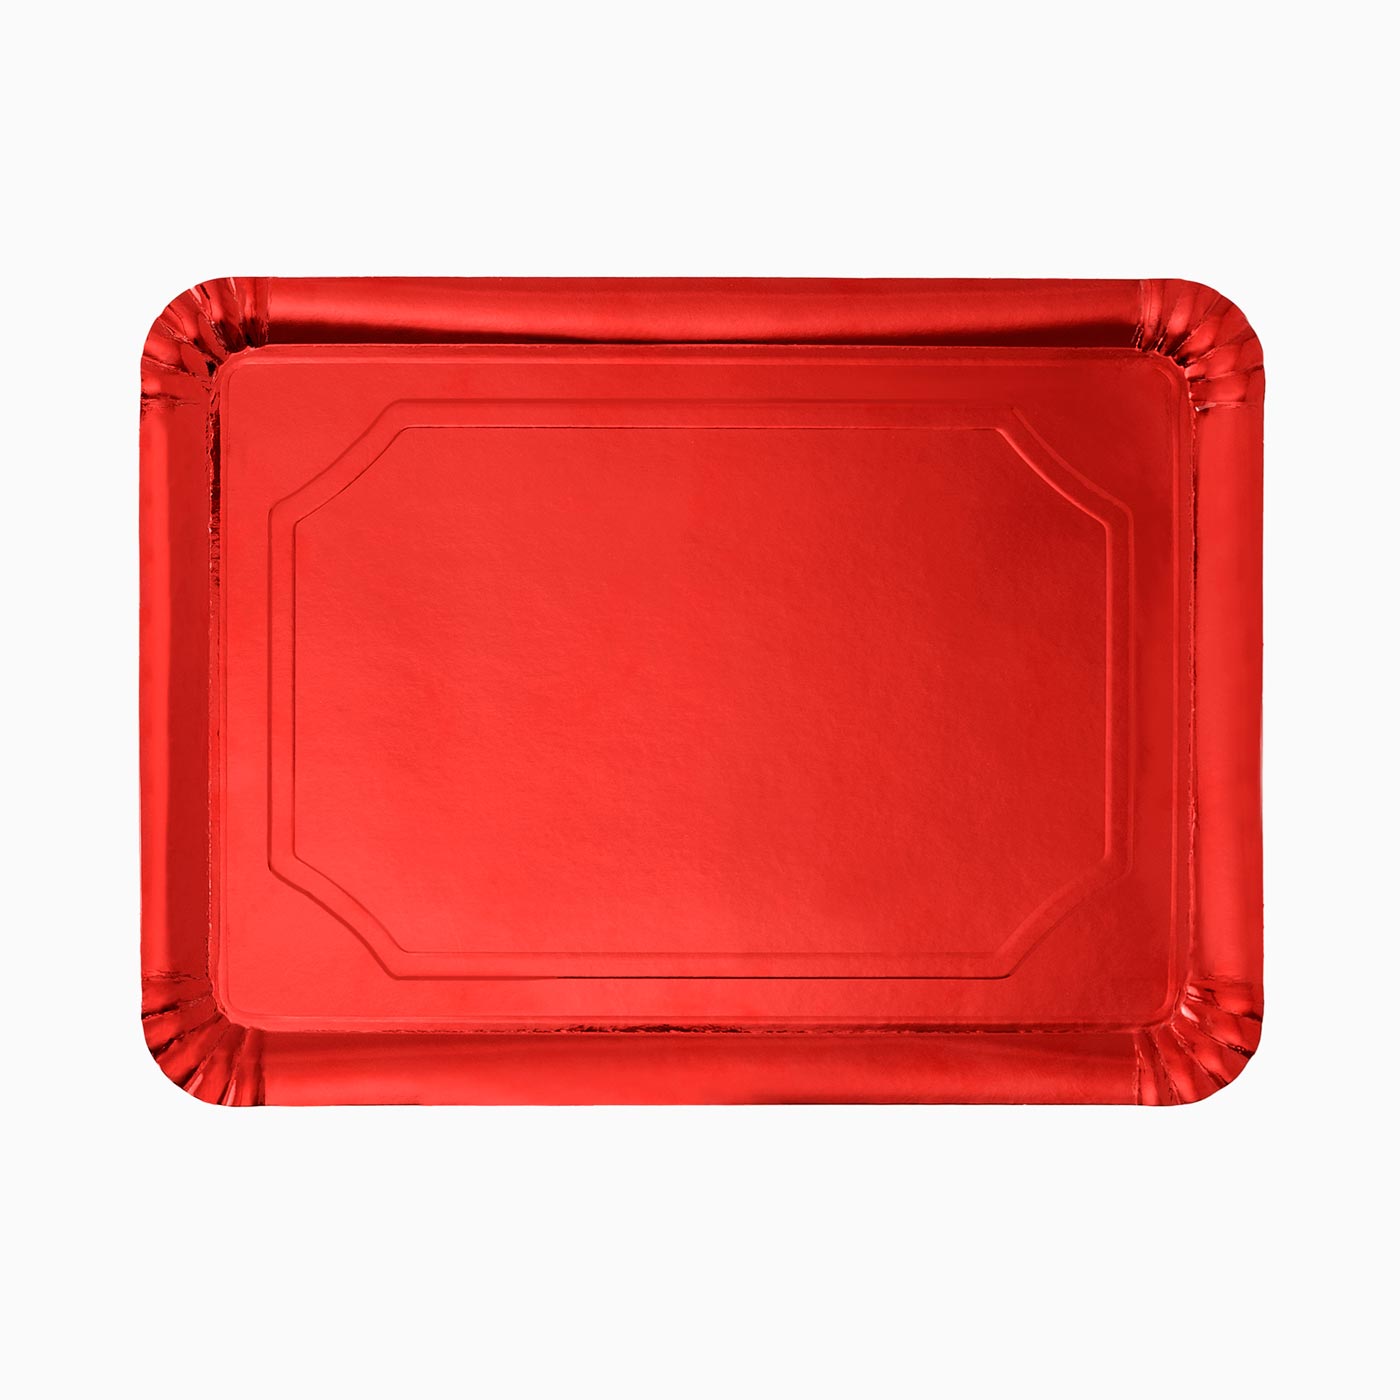 25 x 34 cm red rectangular tray